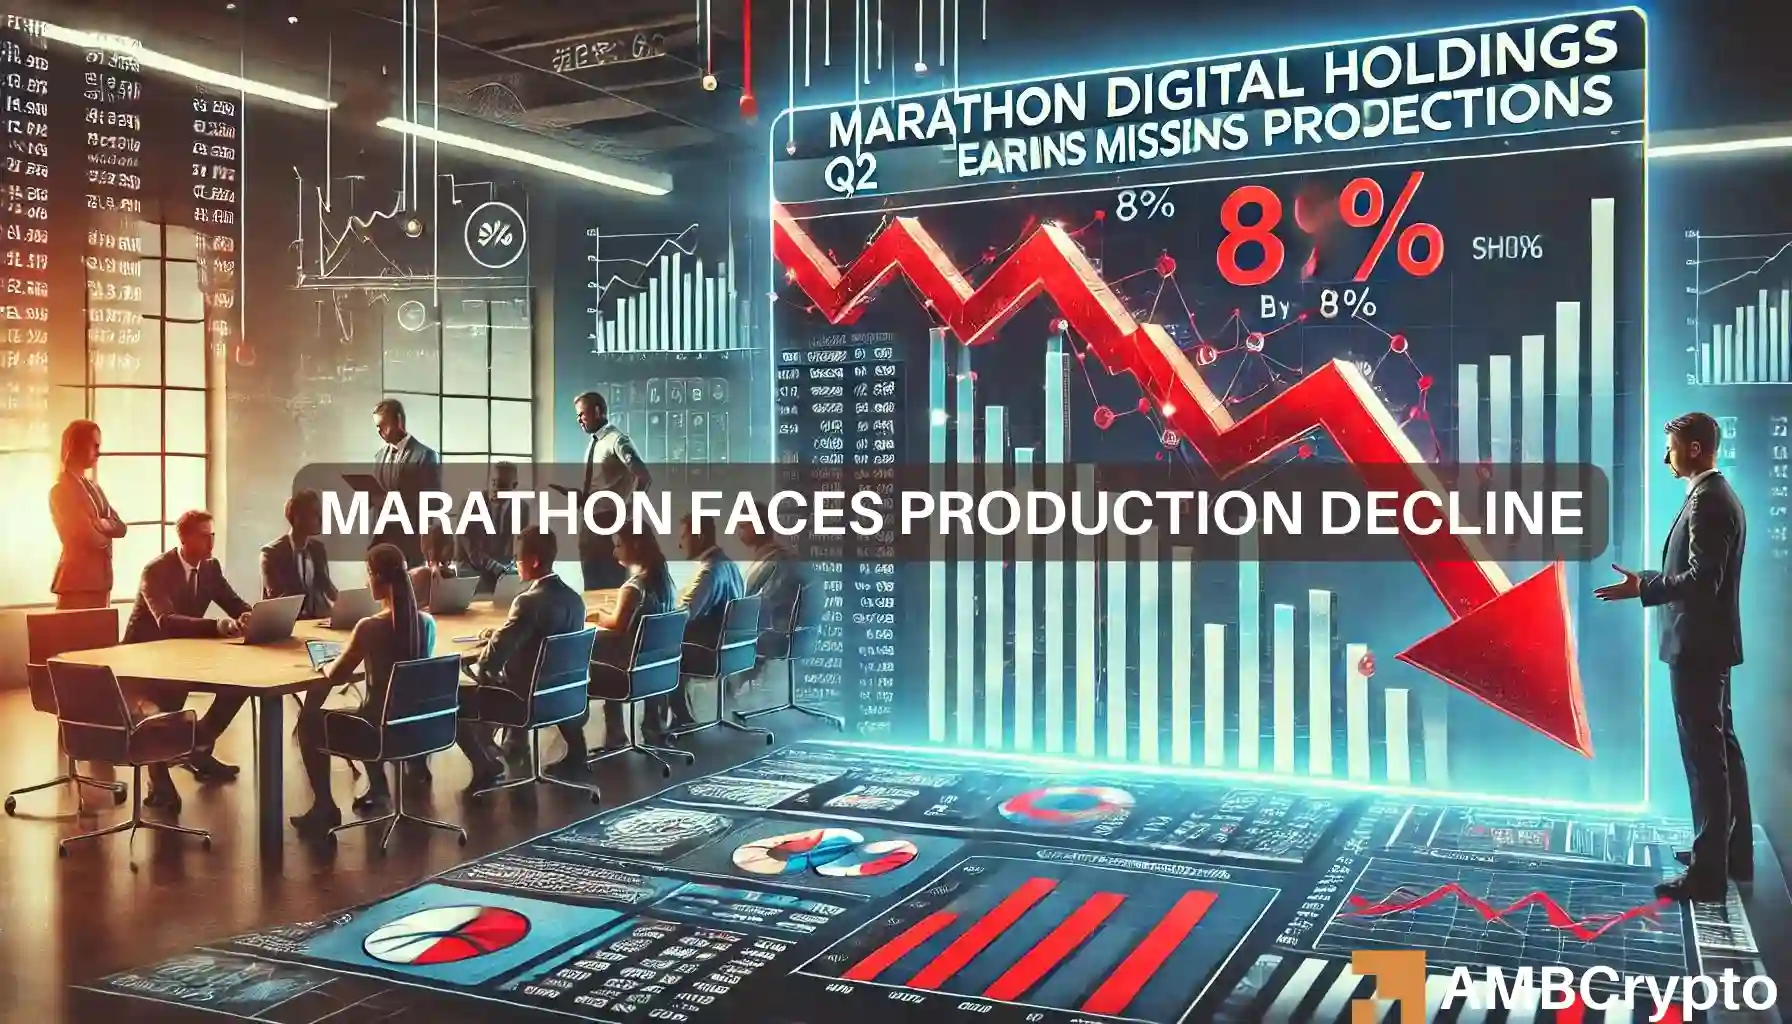 Marathon Digital Q2 earnings miss projections, shares drop 8%